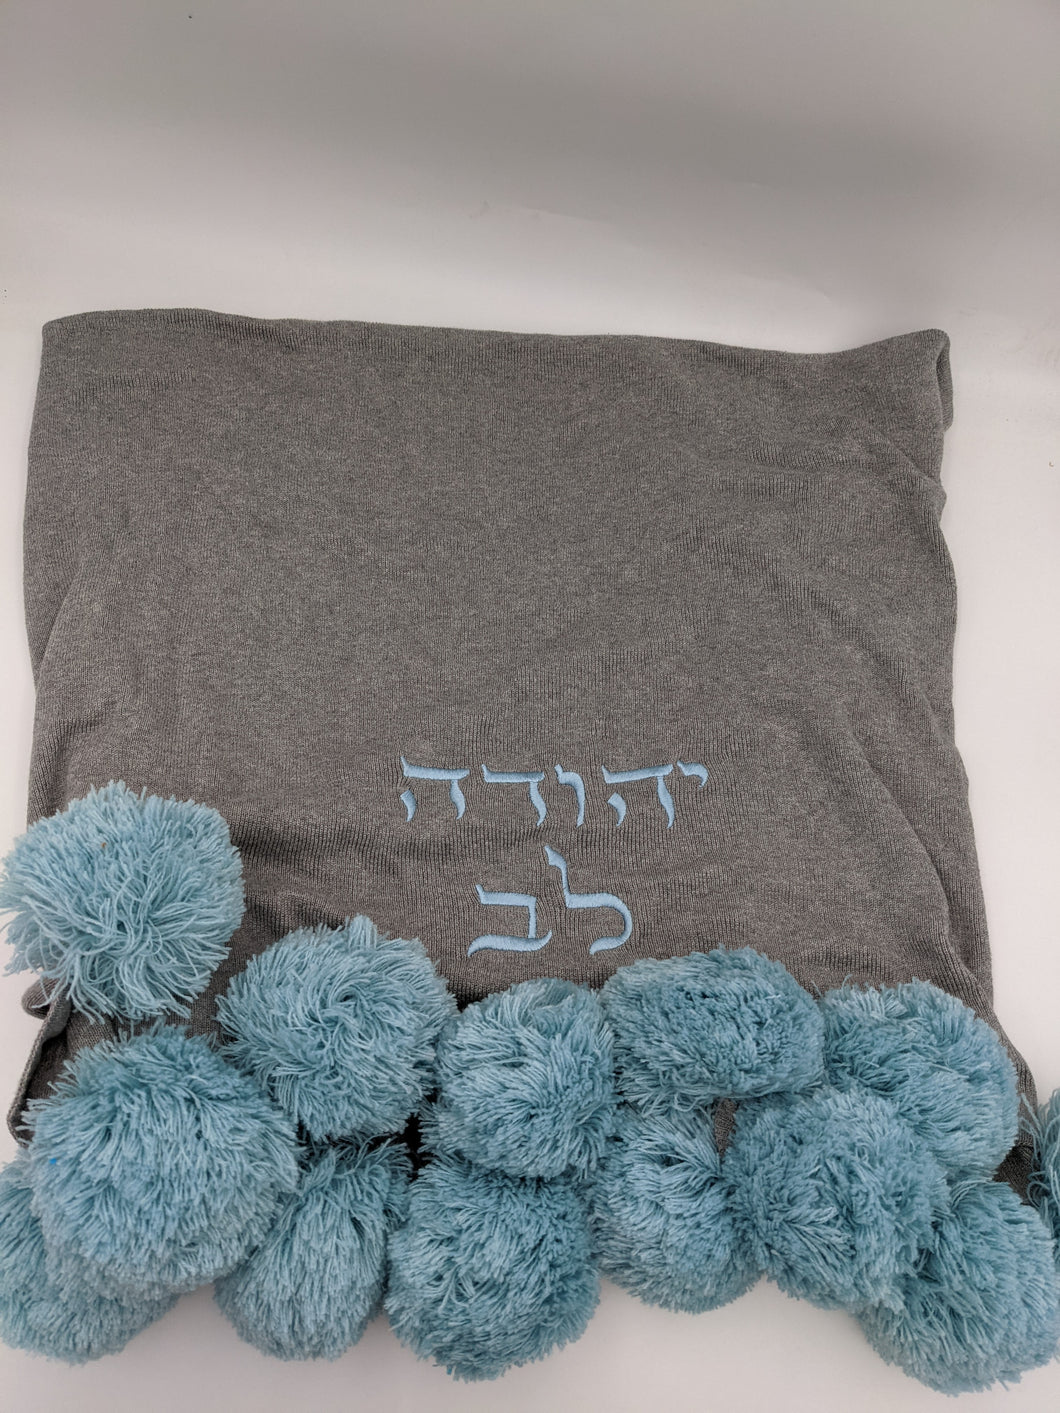 **Lucky Name** Yehuda Lev - Blue Pom Pom Blanket